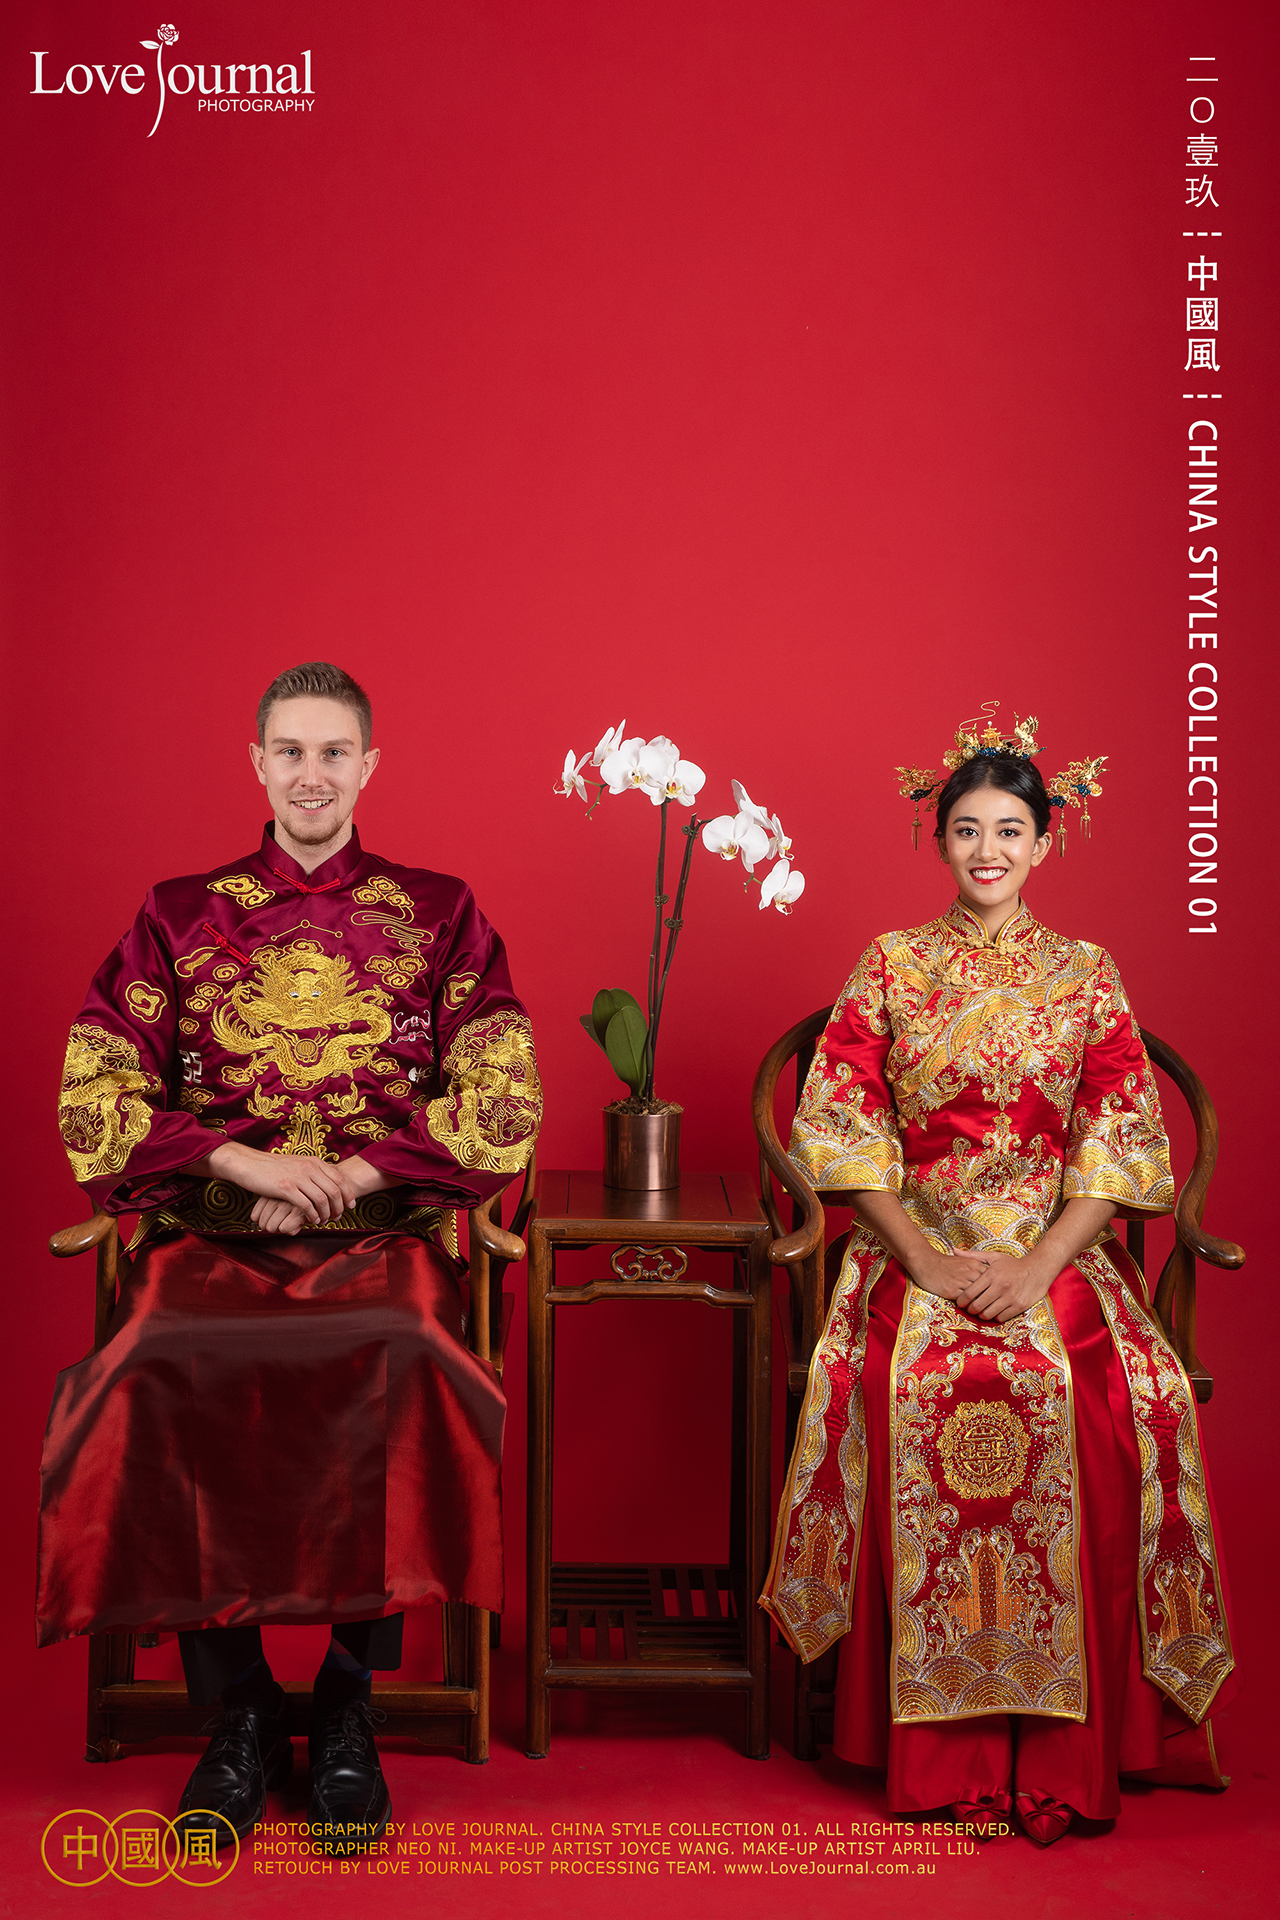 https://www.lovejournal.com.au/Studio-Pre-Wedding-Photography/Studio-Pre-Wedding-Photography-China-Style-01/Chinese-style-pre-wedding-photography-melbourne-02.jpg